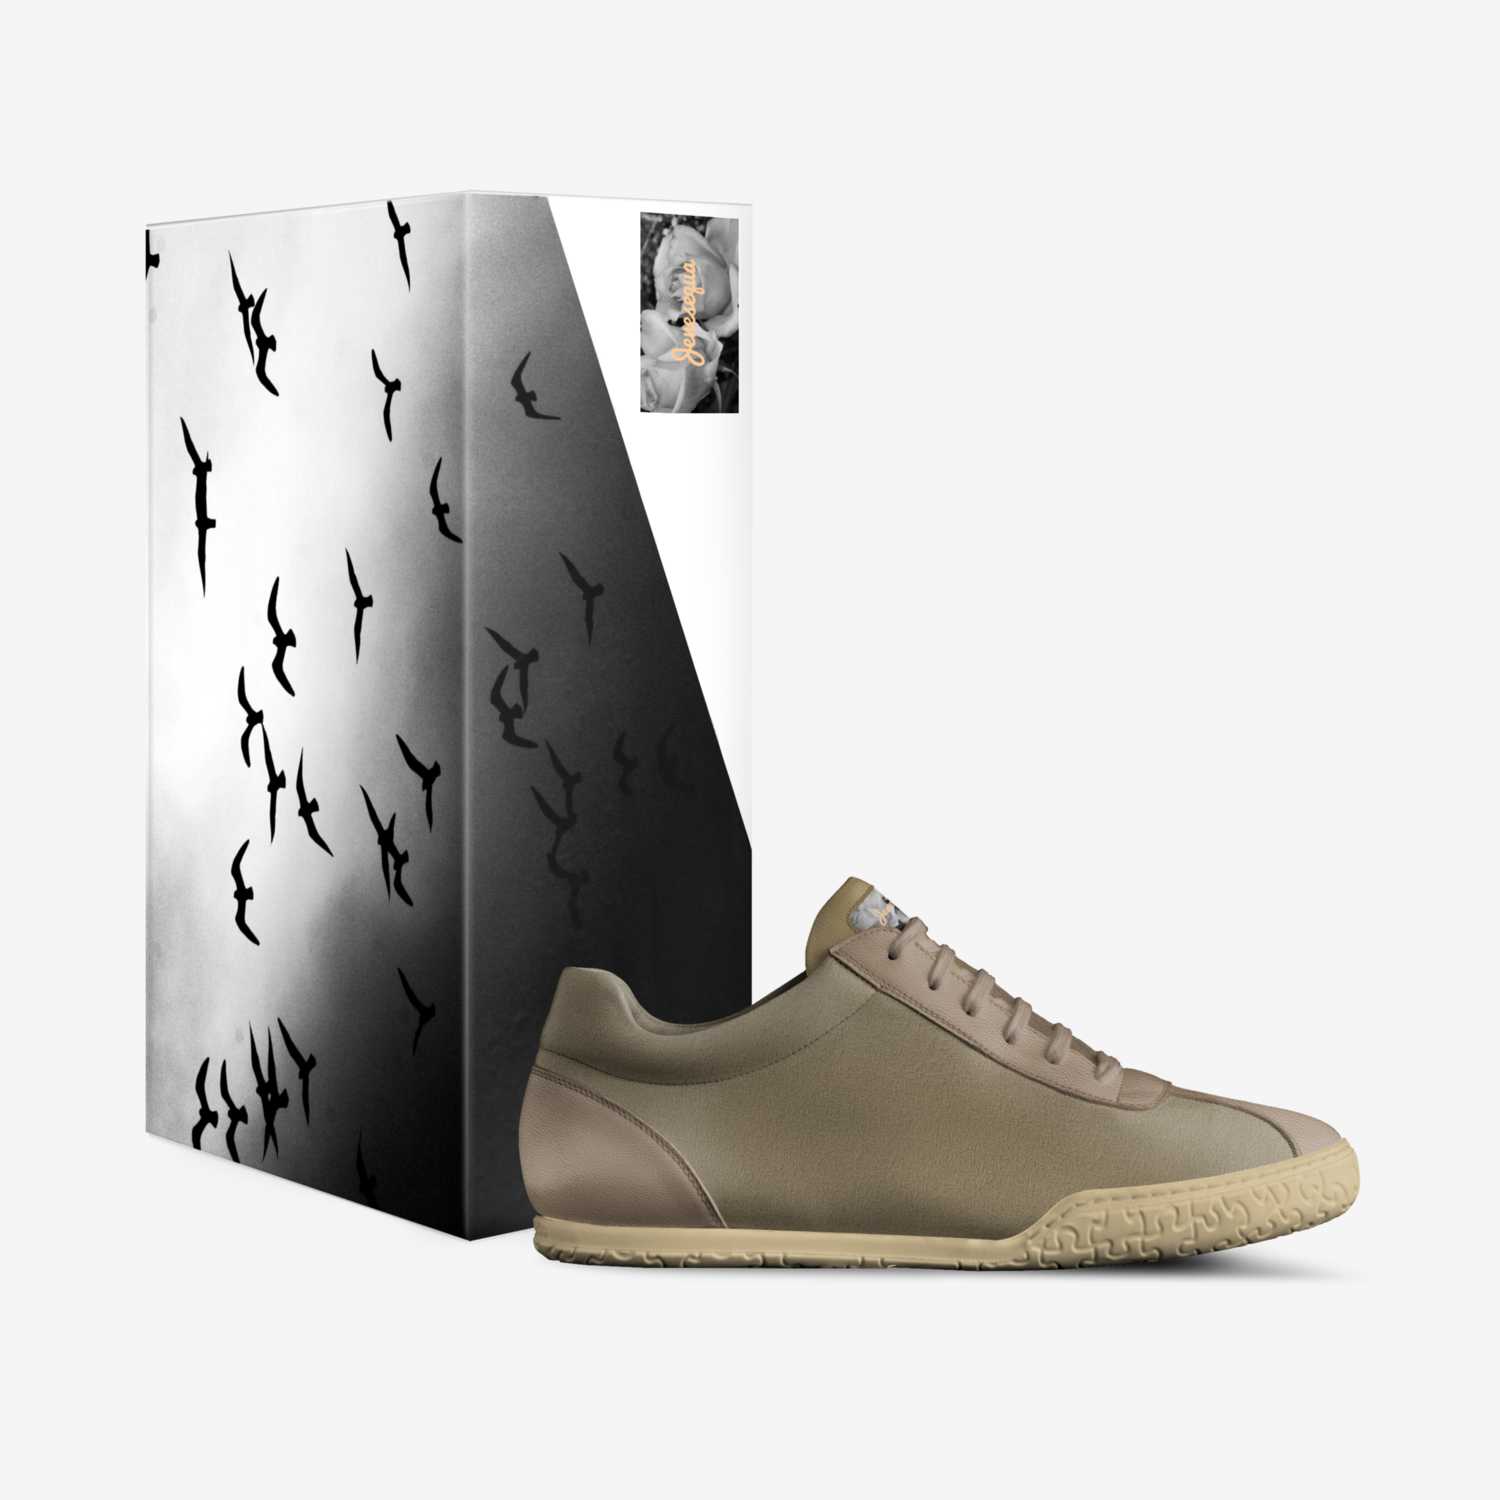 Jenesequa custom made in Italy shoes by Kanario Kenney | Box view